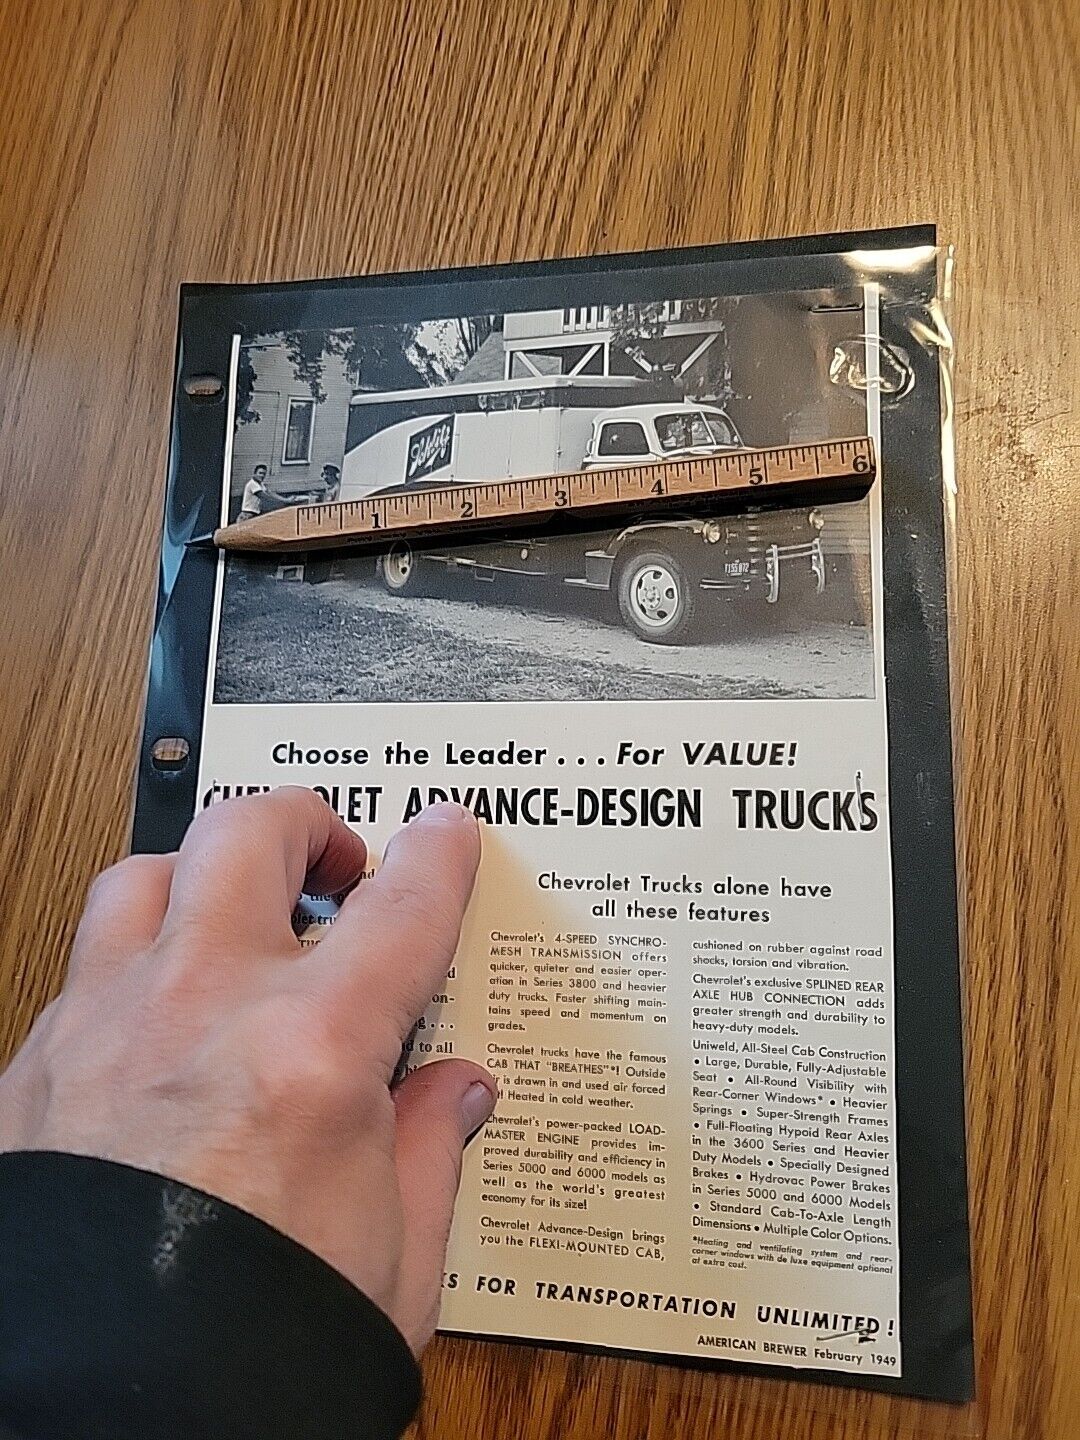 (VTG) 1949 Schlitz Beer Delivery Truck Photo Voegler Distributing Indiana 